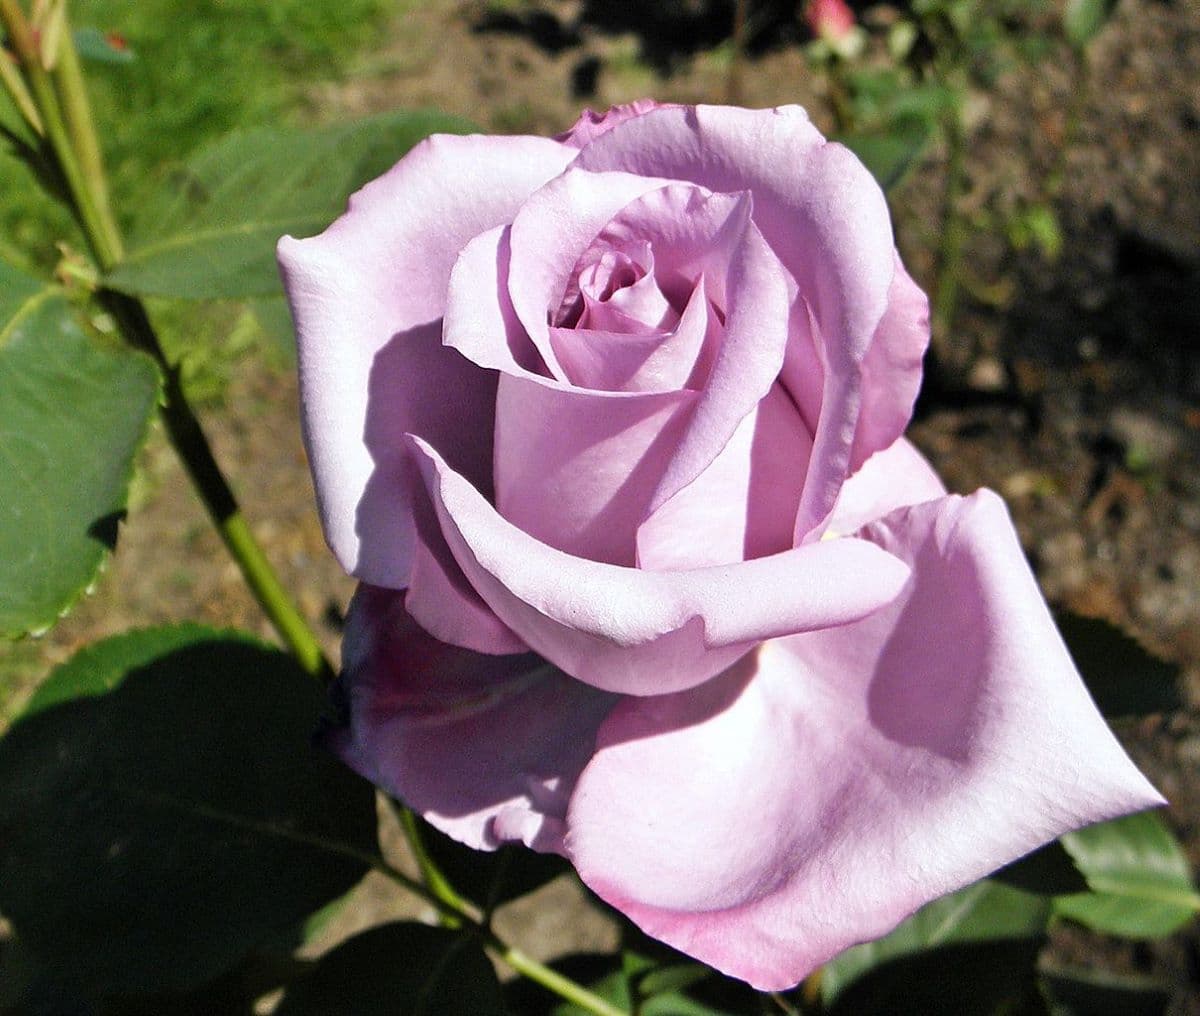 La rosa híbrido de té es un arbusto de flores grandes